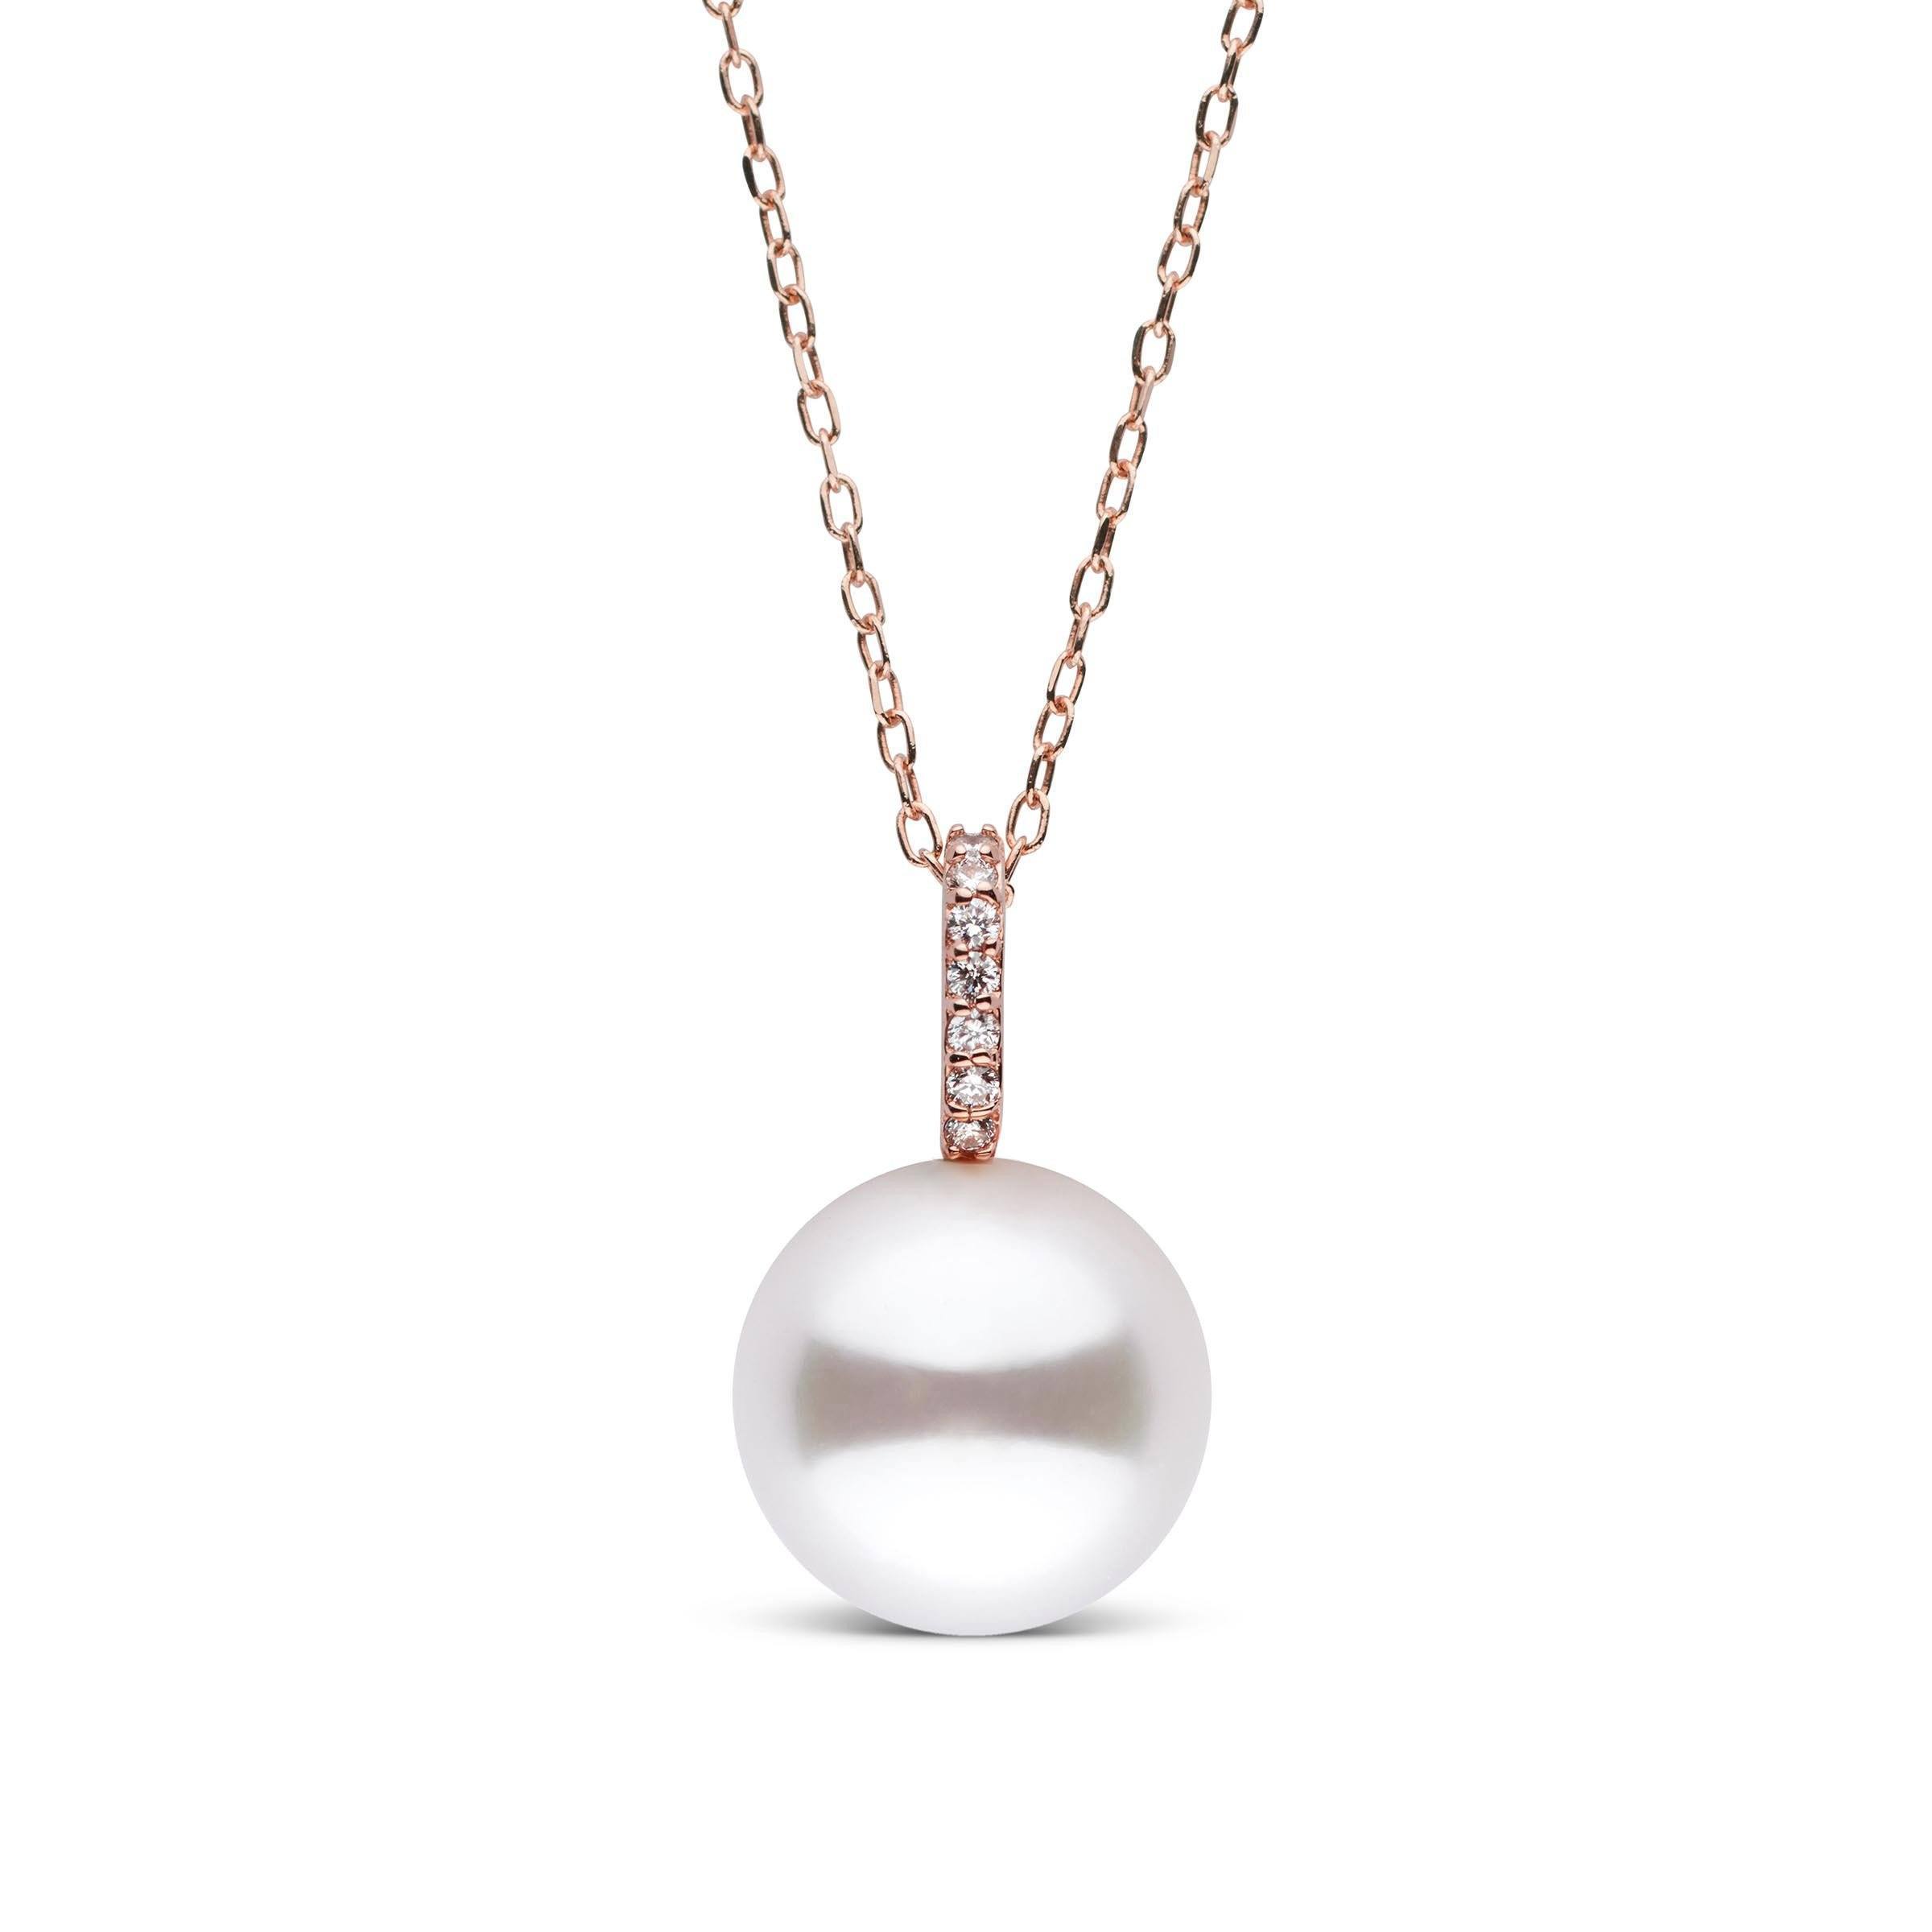 White South Sea Pearls